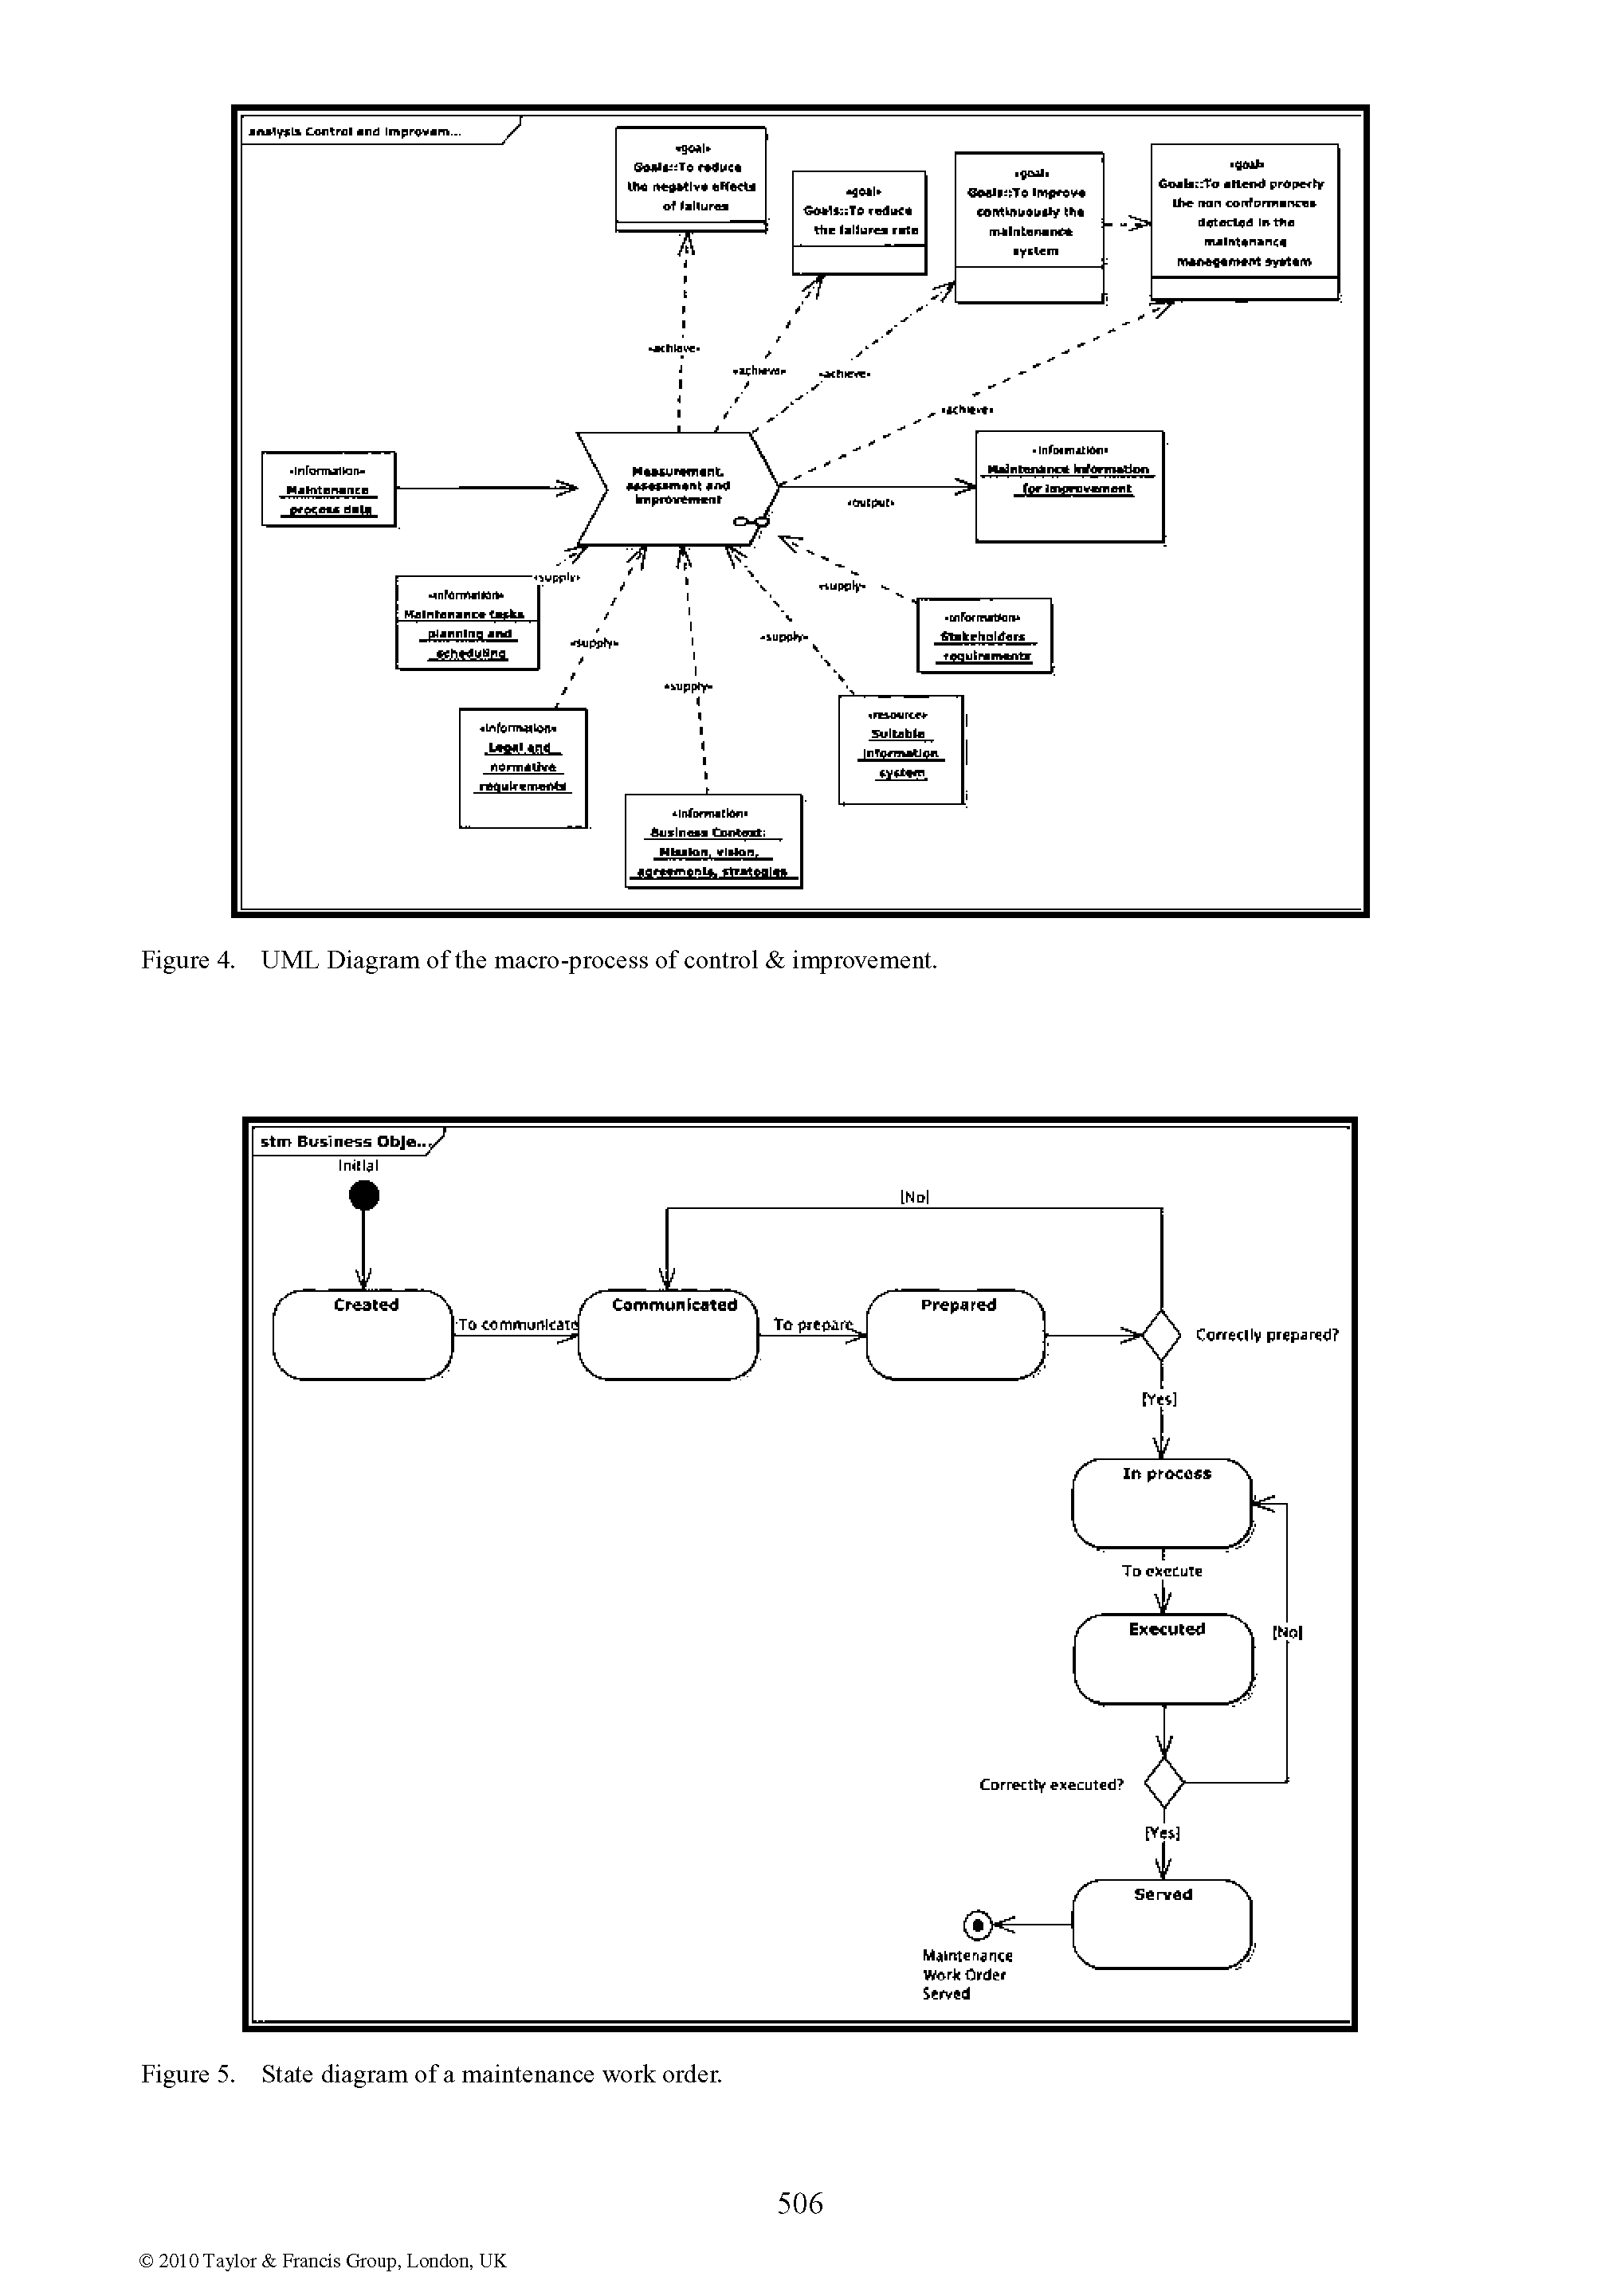 Figure 4. UML Diagram of the macro-process of control improvement.